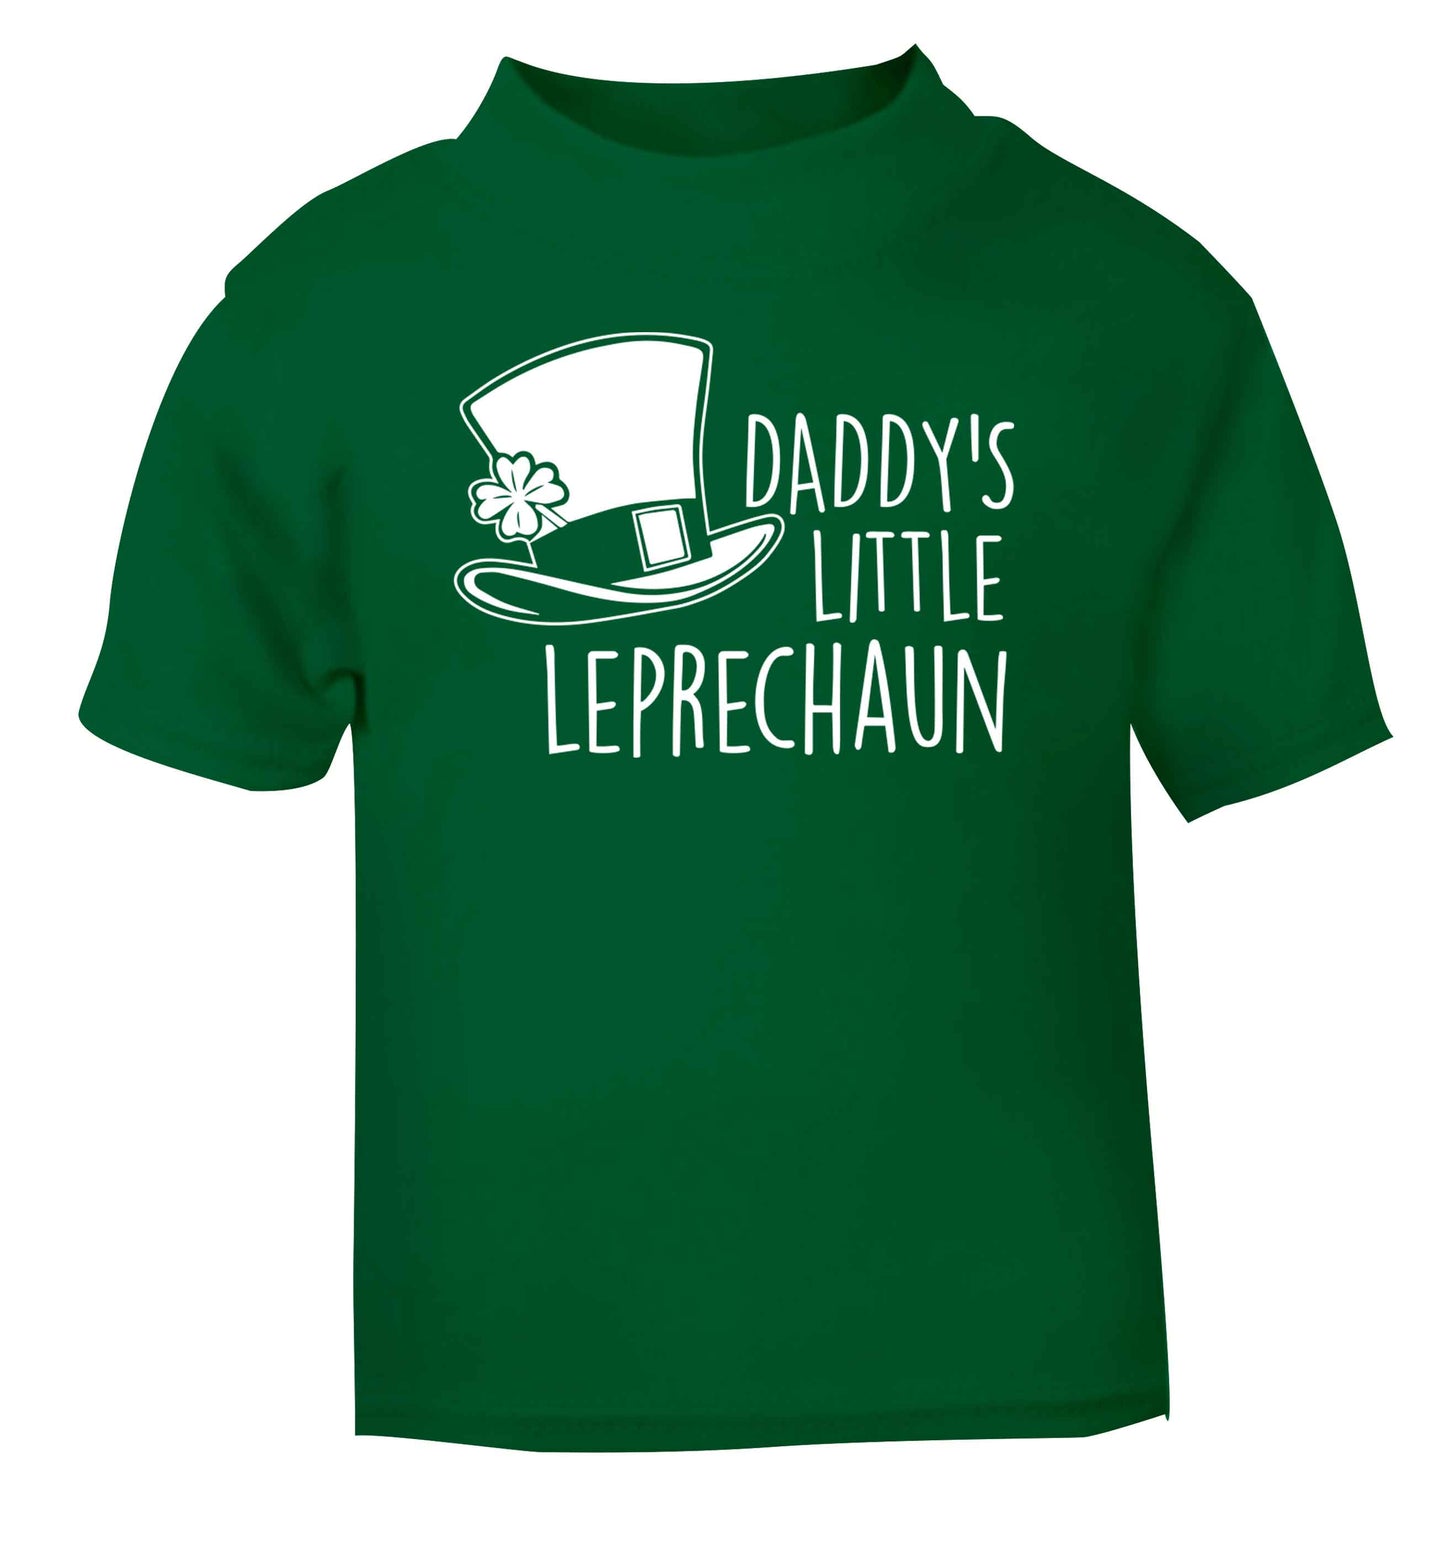 Daddy's little leprechaun green baby toddler Tshirt 2 Years